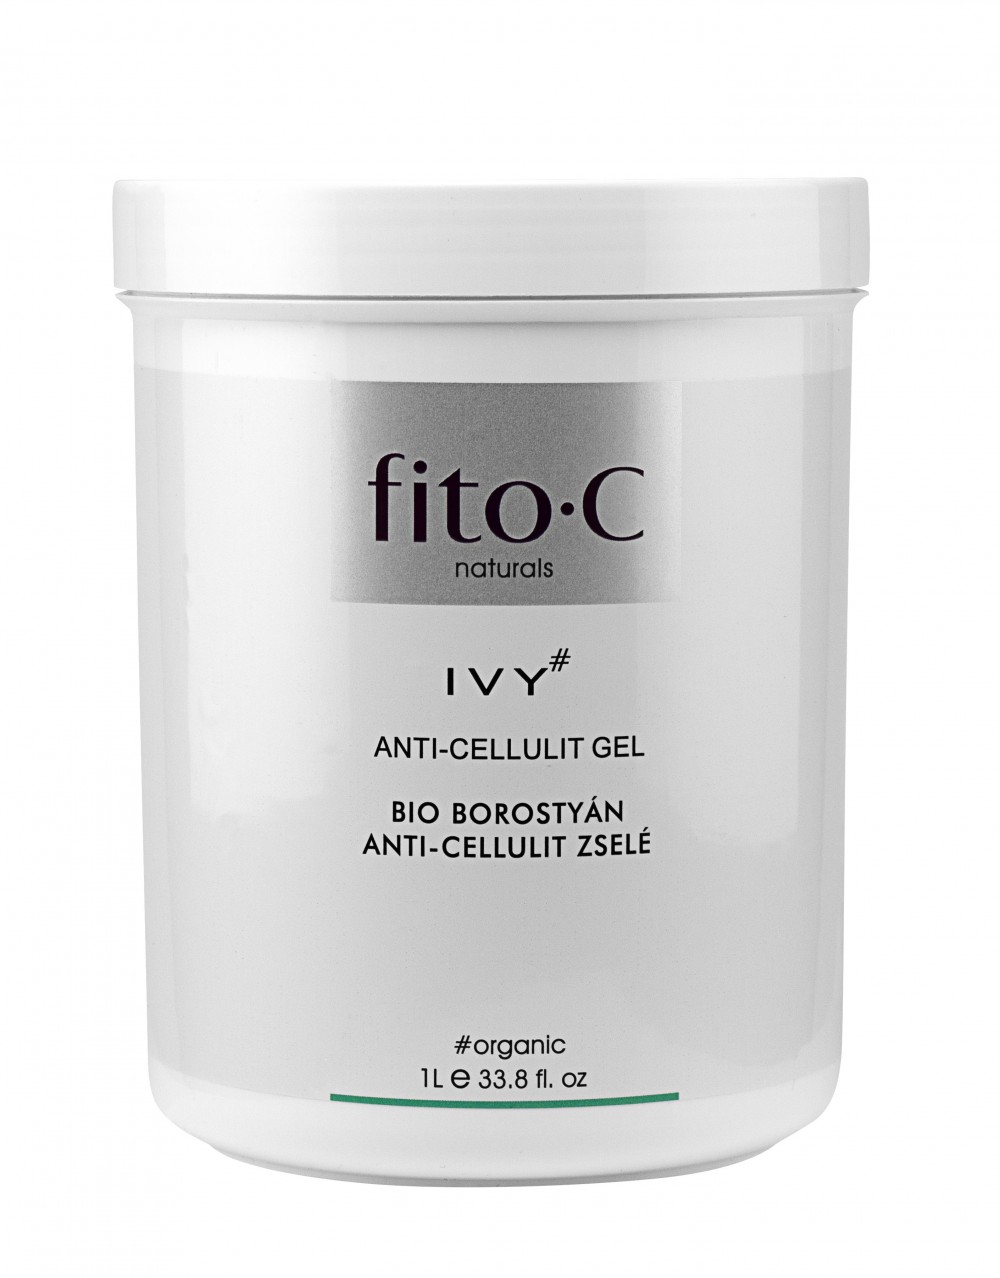 fito.C - Ivy Anti-cellulit Gel - Bio Borostyán Anti-cellulit Zselé, 1000ml